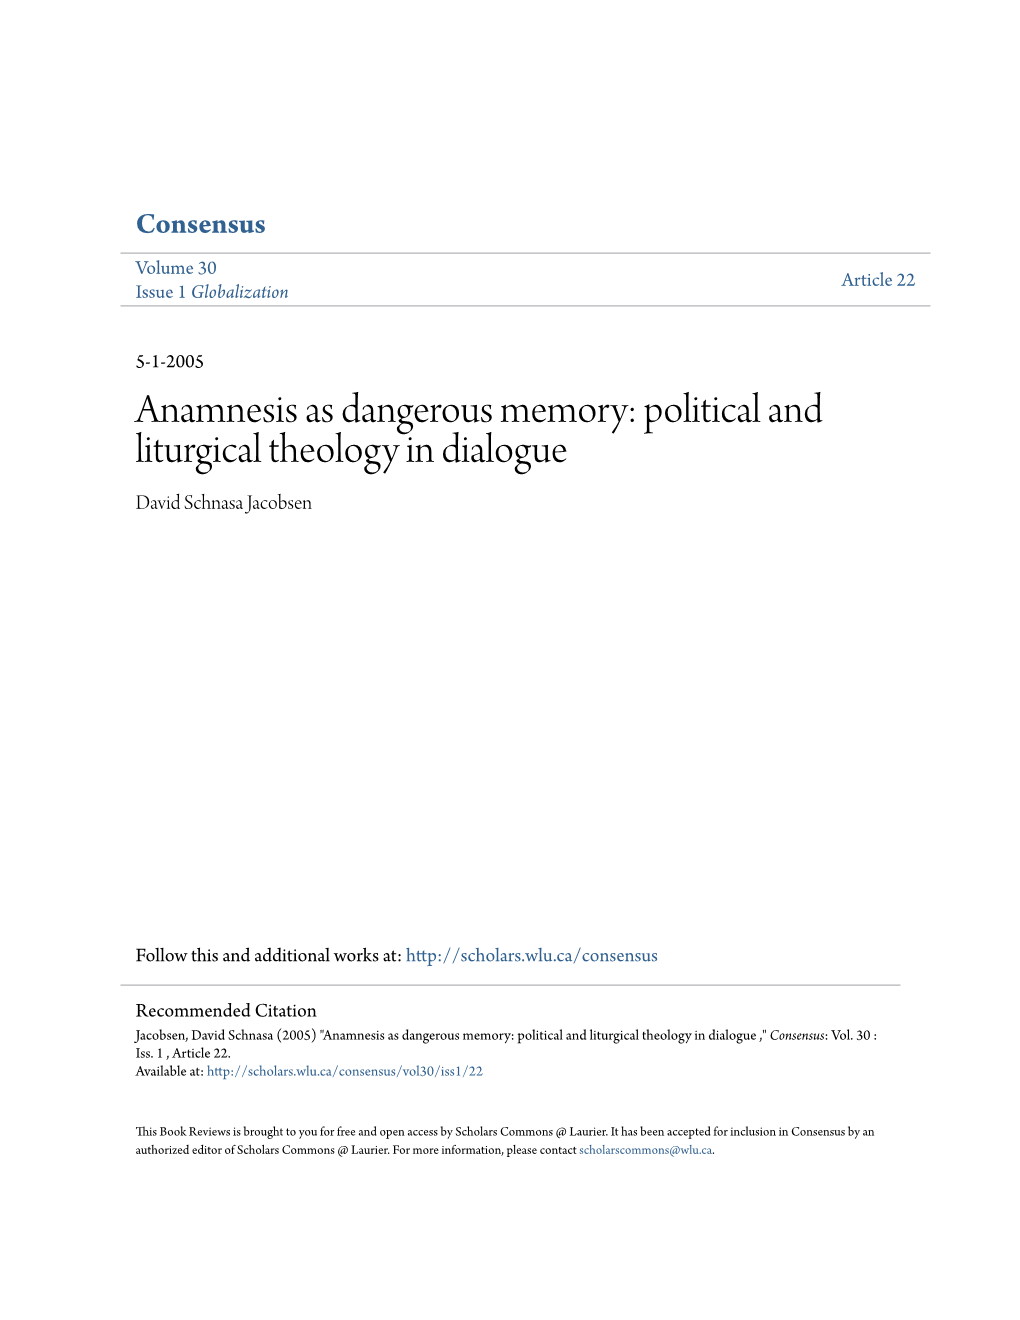 Anamnesis As Dangerous Memory: Political and Liturgical Theology in Dialogue David Schnasa Jacobsen